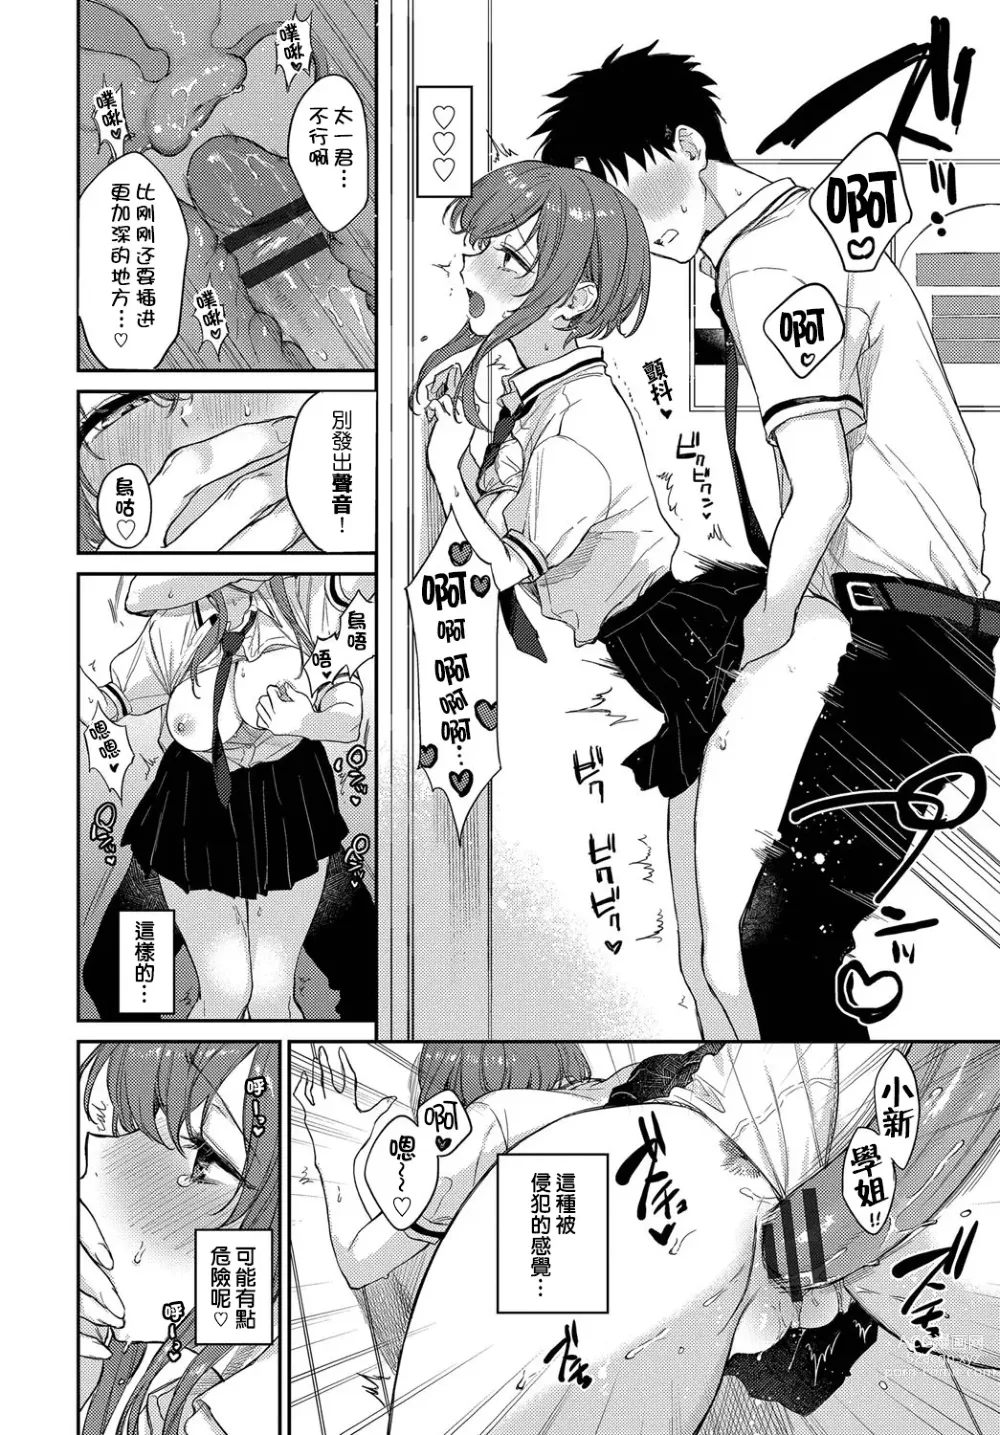 Page 8 of manga Comepain 2